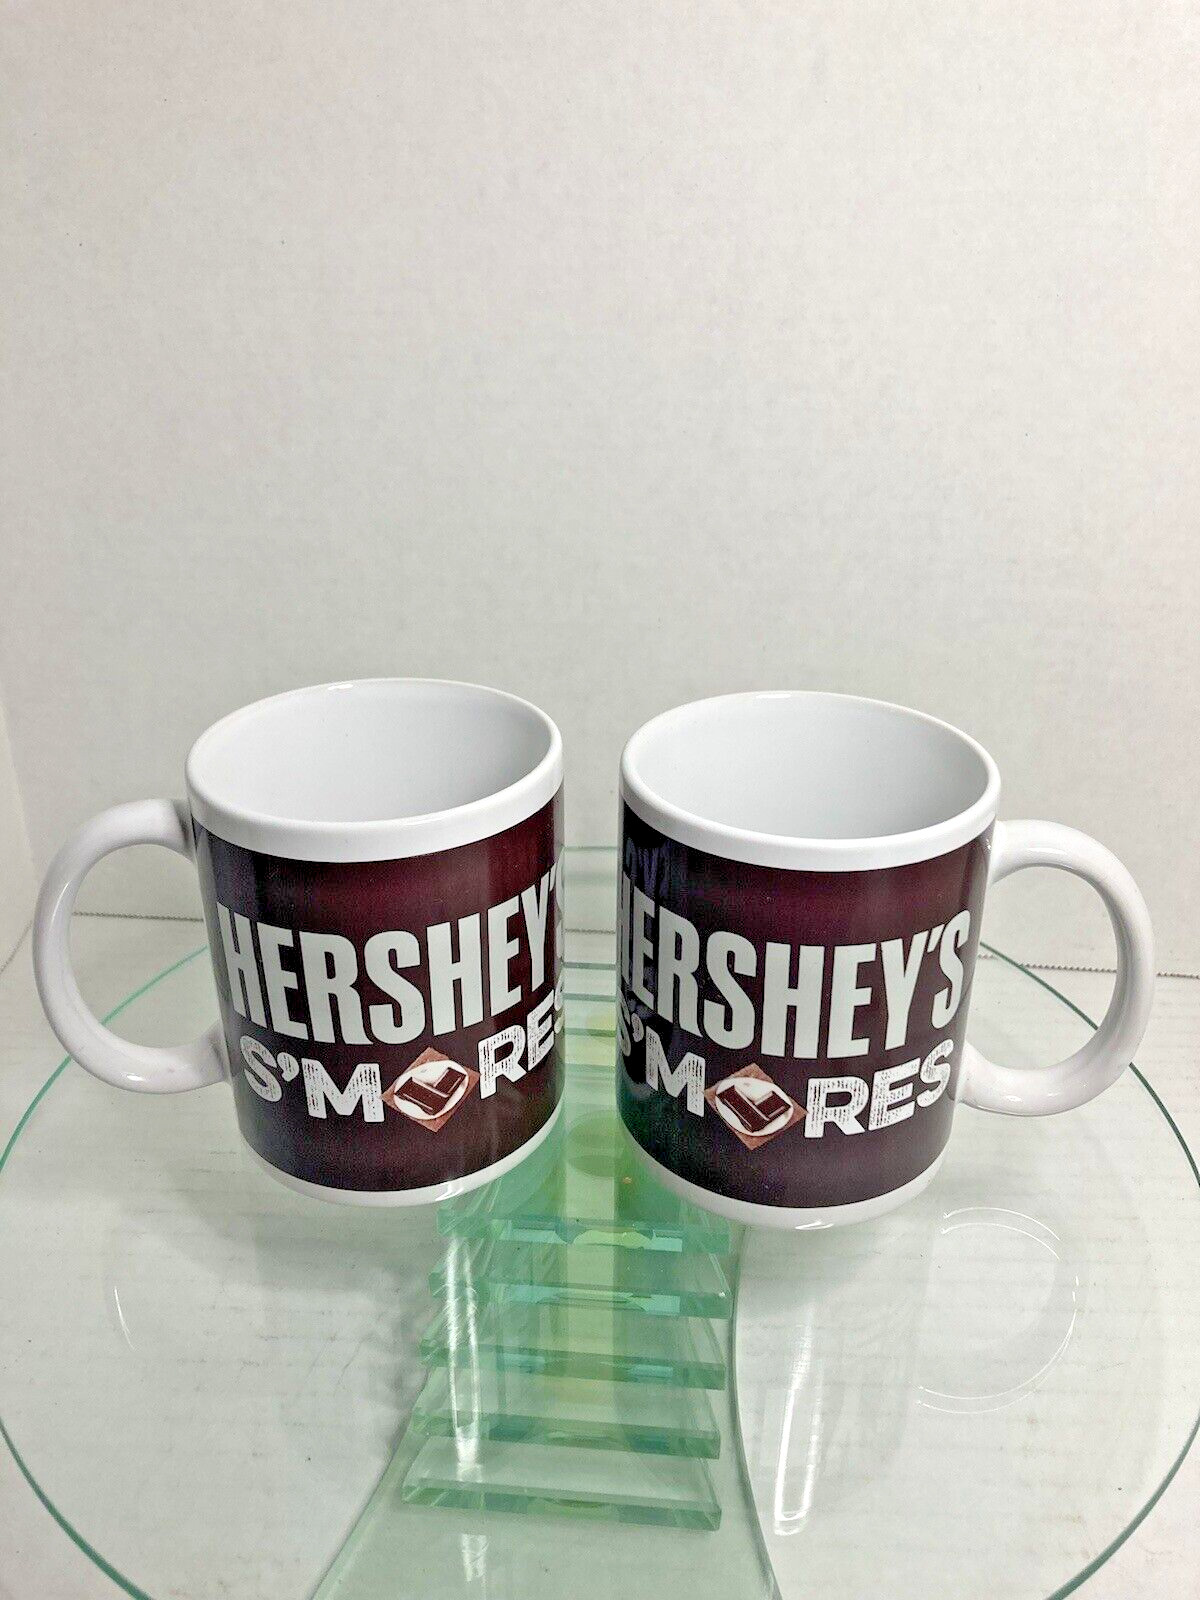 Hershey’s S’mores Coffee/Hot Chocolate/Tea Mug Cup Vintage